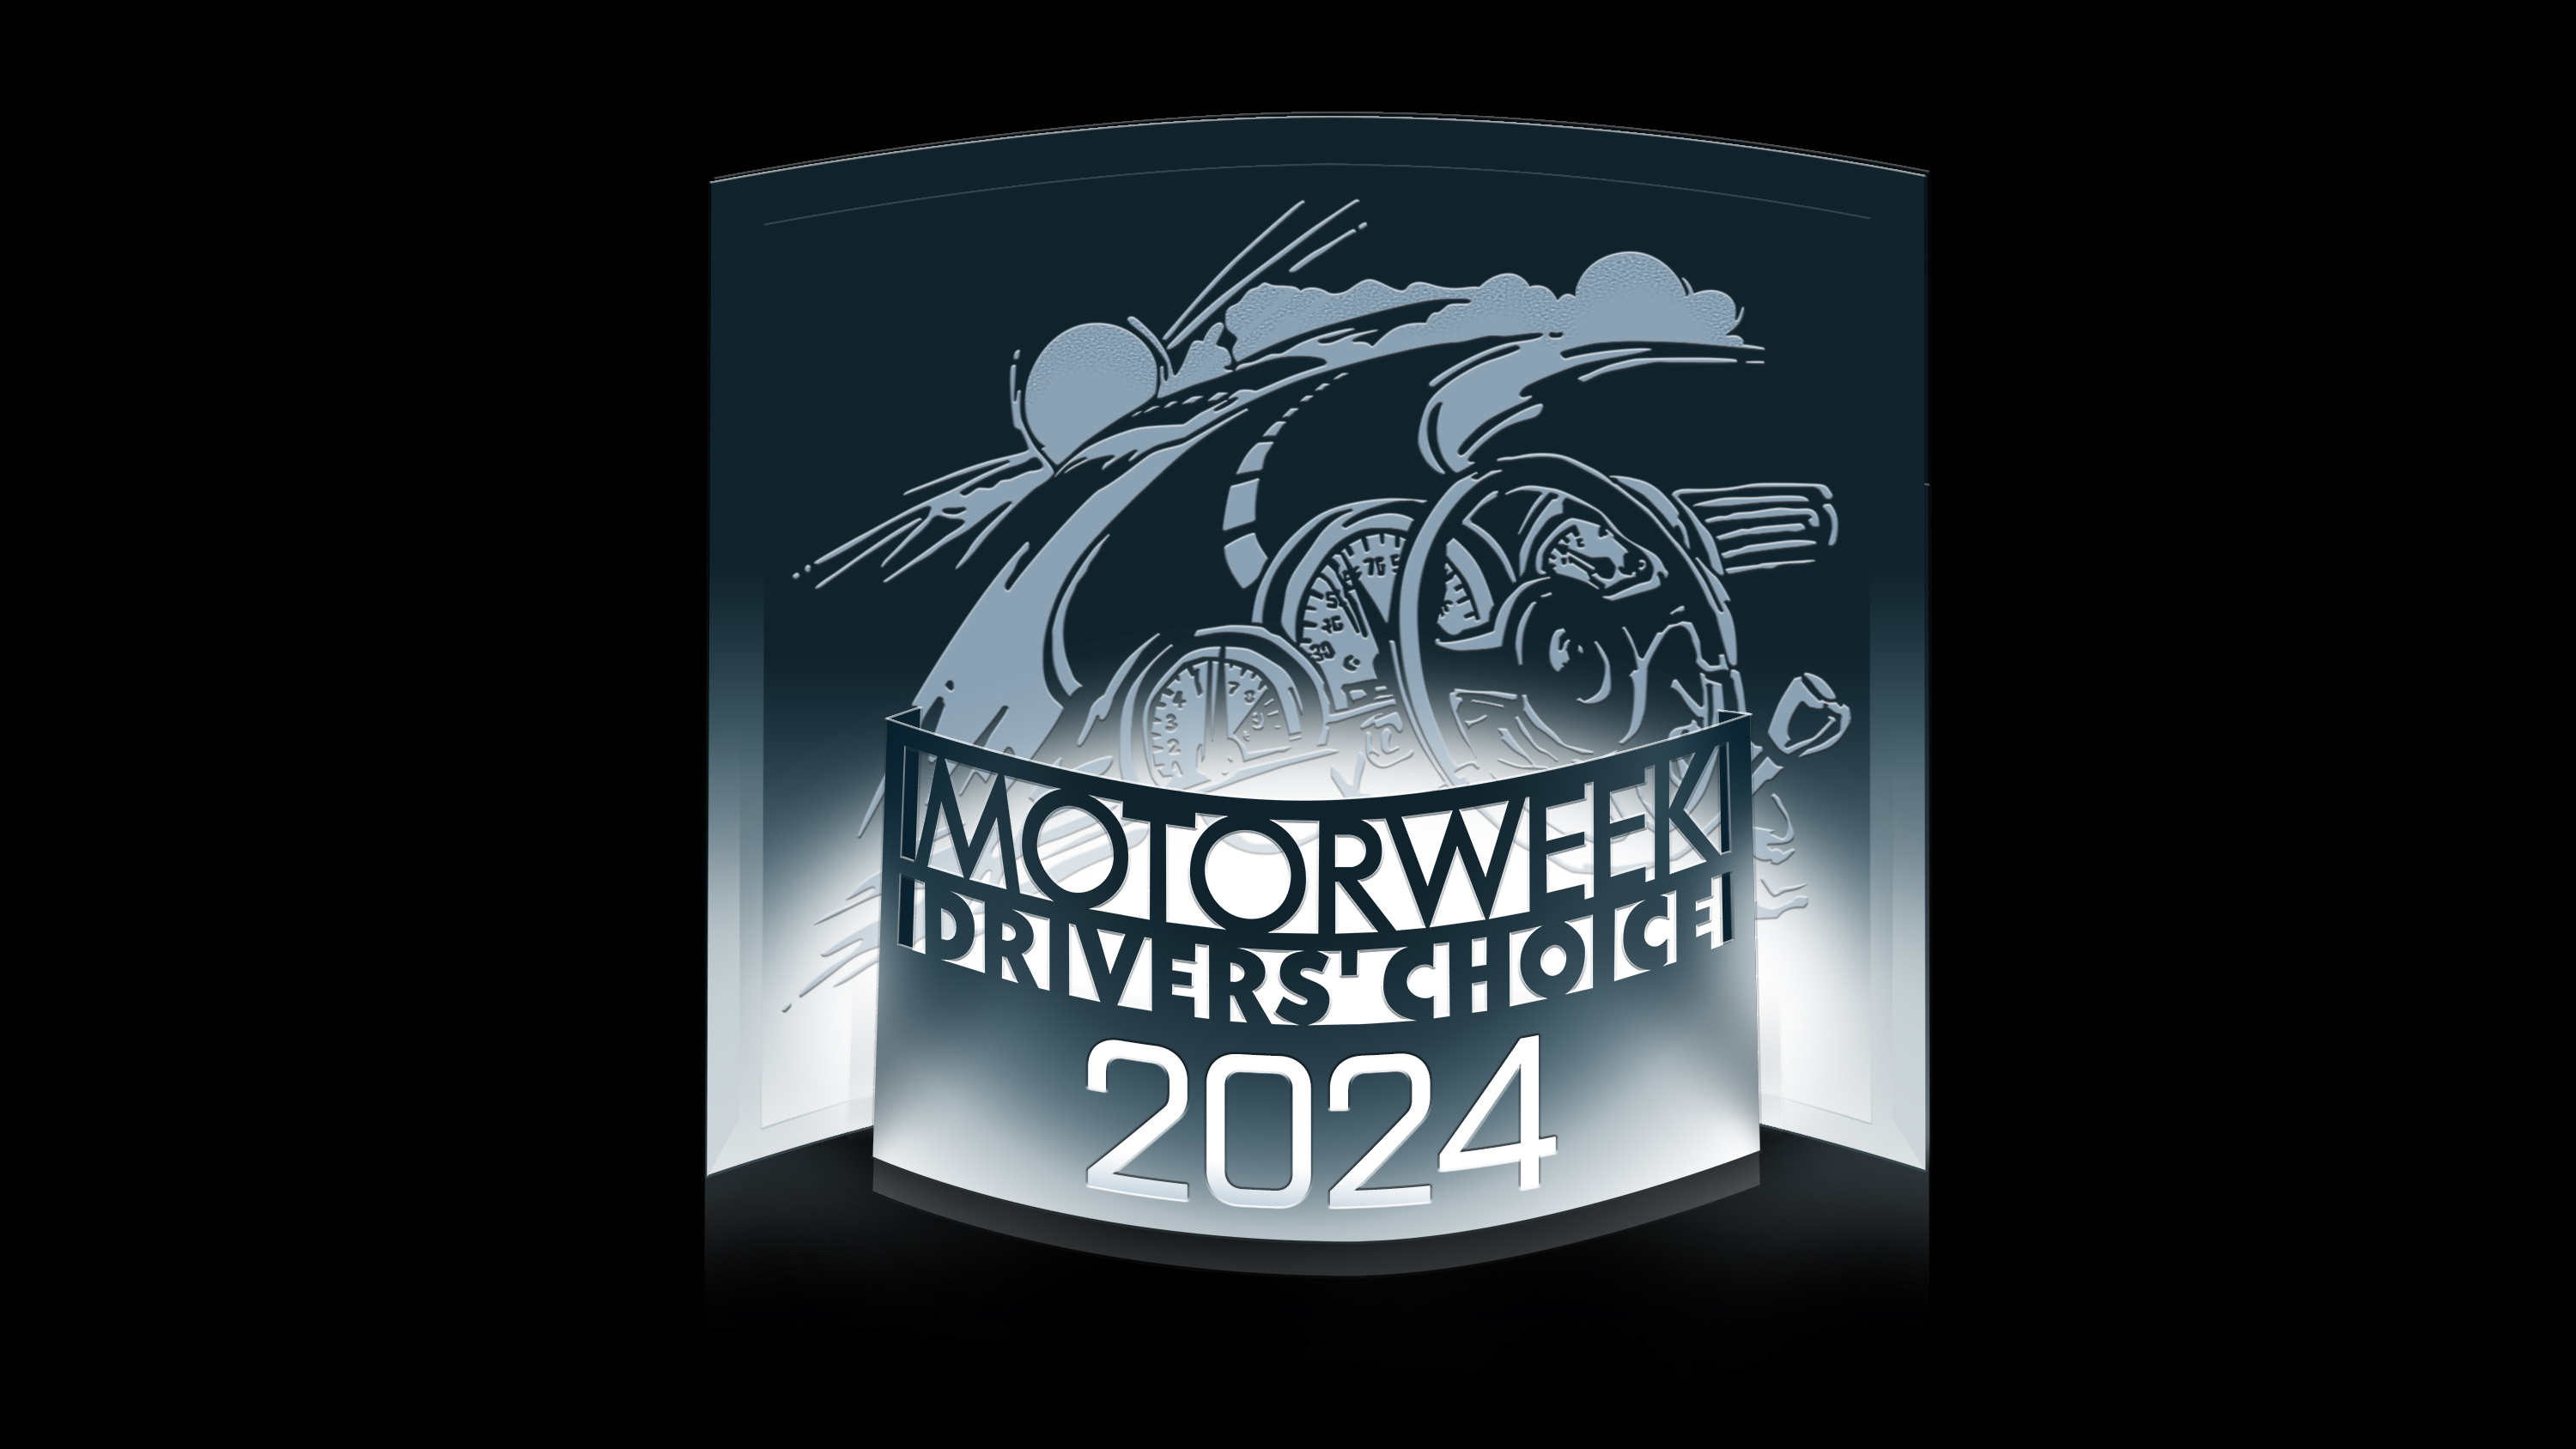 Motorweek's Drivers' Choice Award